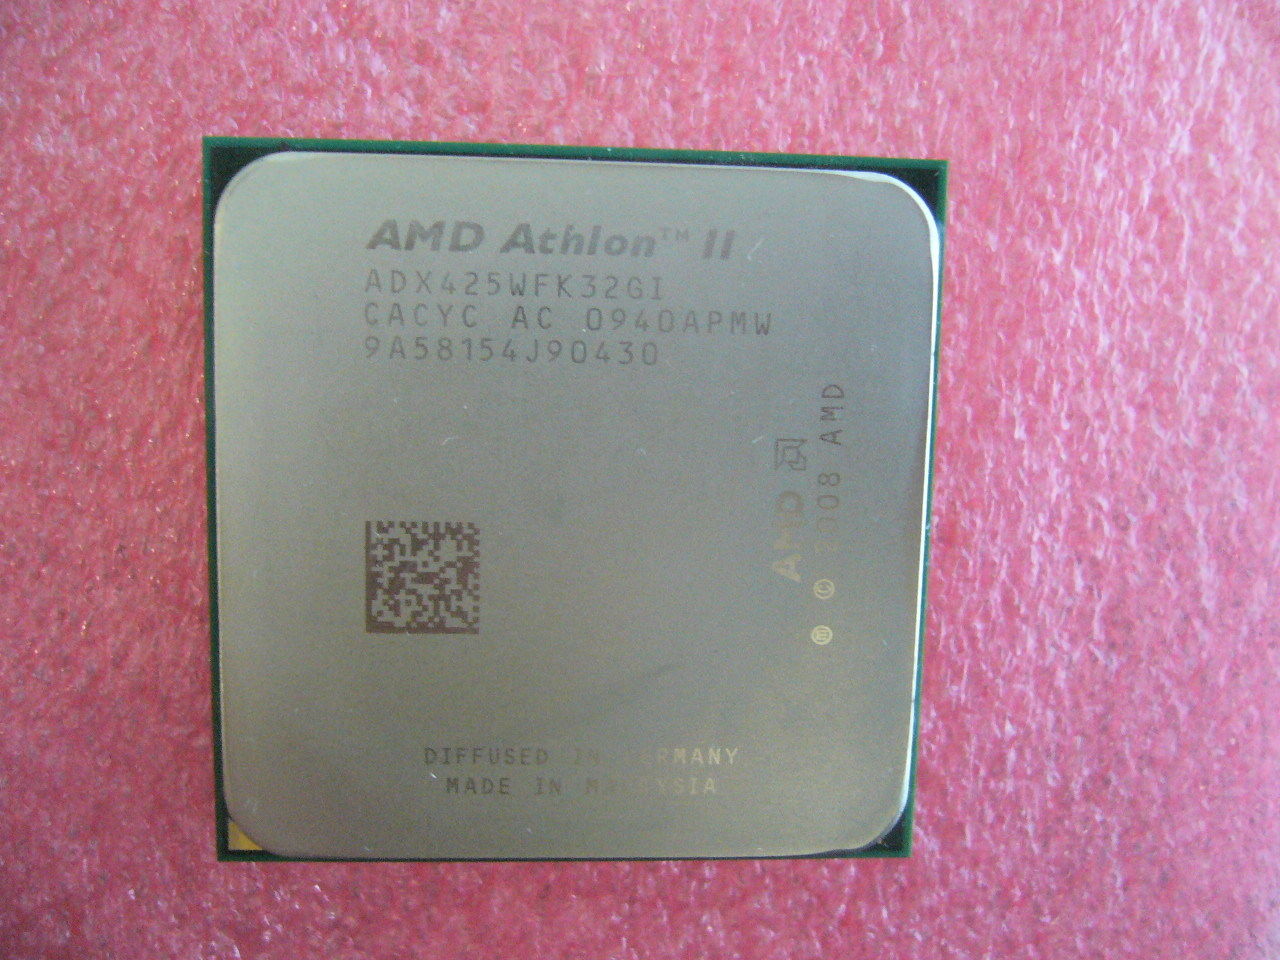 QTY 1x AMD Athlon II X3 425 2.7 GHz Triple-Core (ADX425WFK32GI) CPU AM3 938-Pin - Click Image to Close